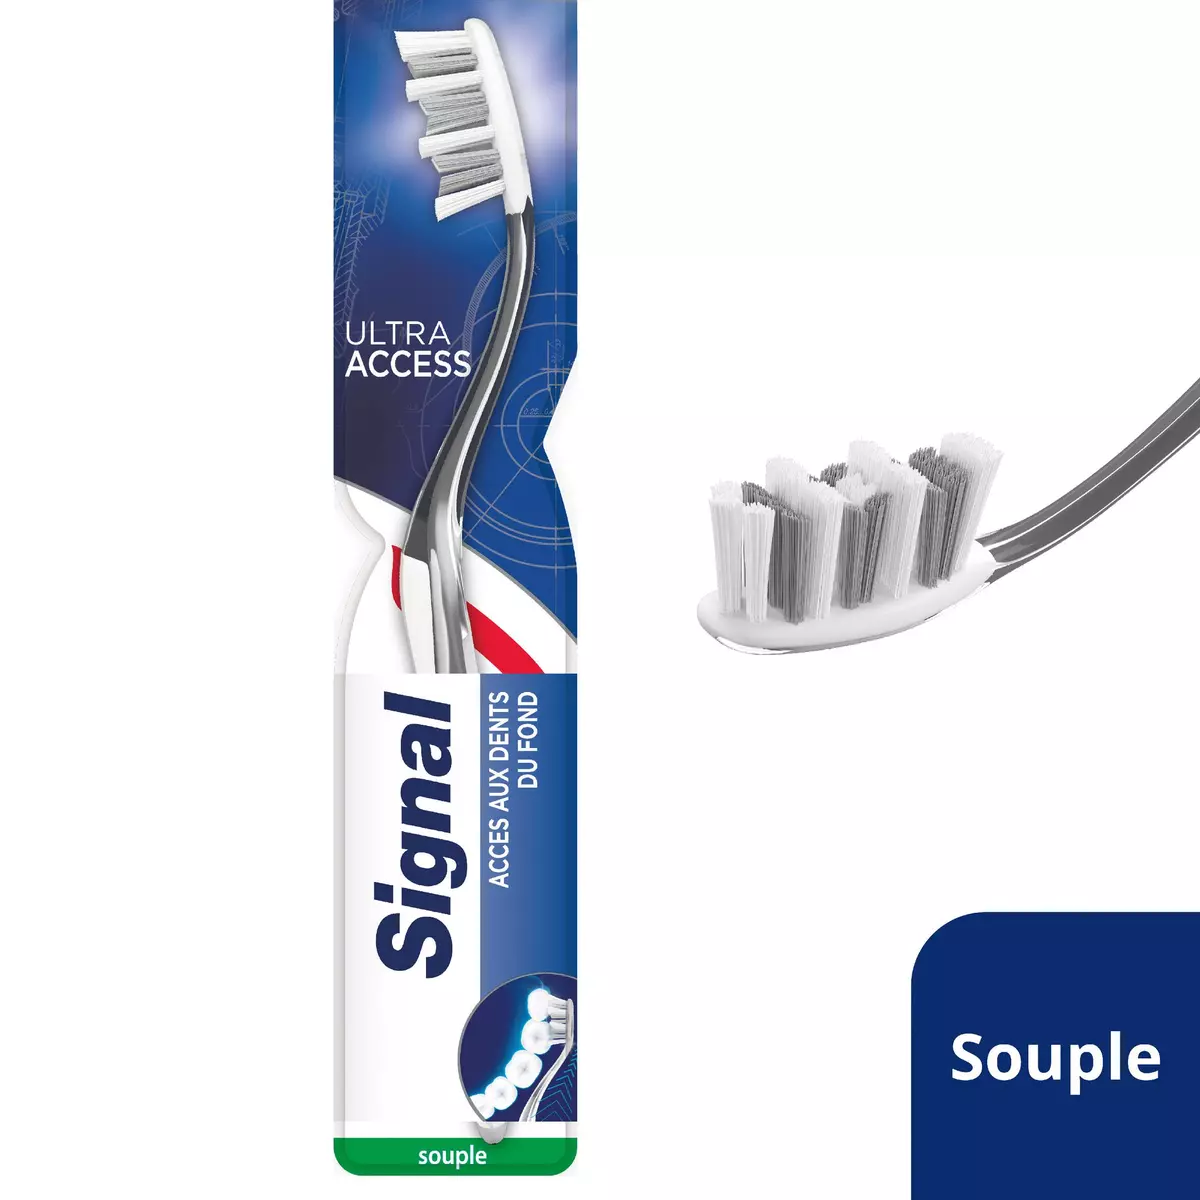 SIGNAL Brosse à dents ultra access souple 1 brosse